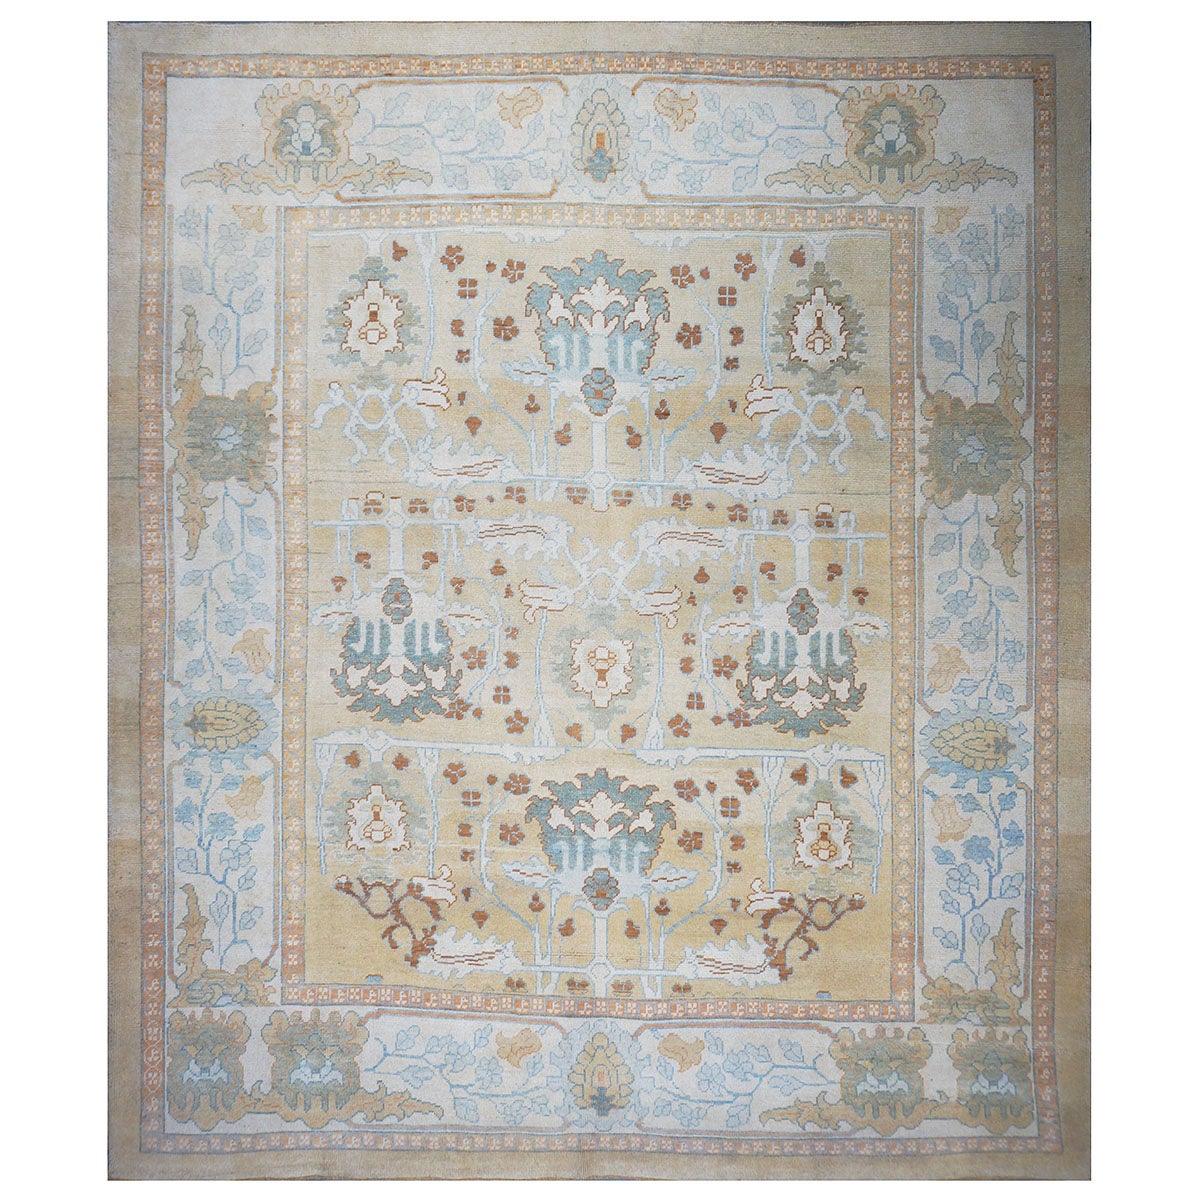 21st Century Turkish Donegal Carpet 11x14 Tan, Blue, & Ivory Area Rug